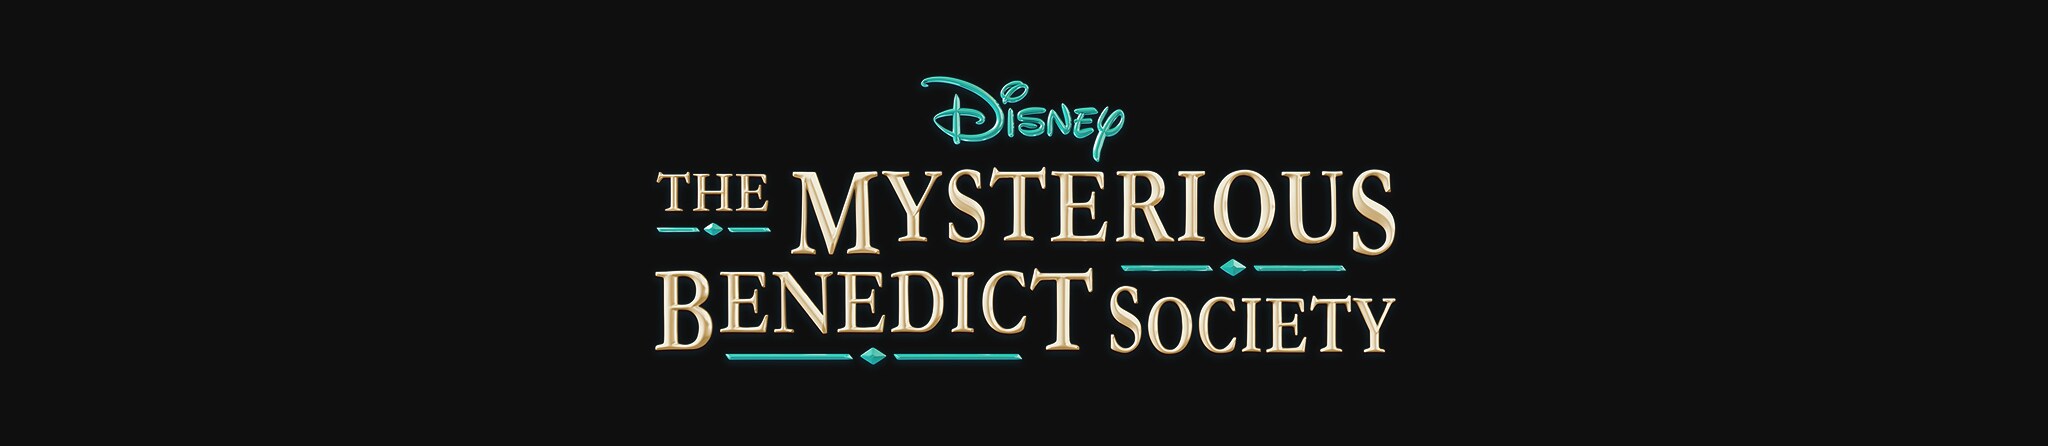 Disney | The Mysterious Benedict Society